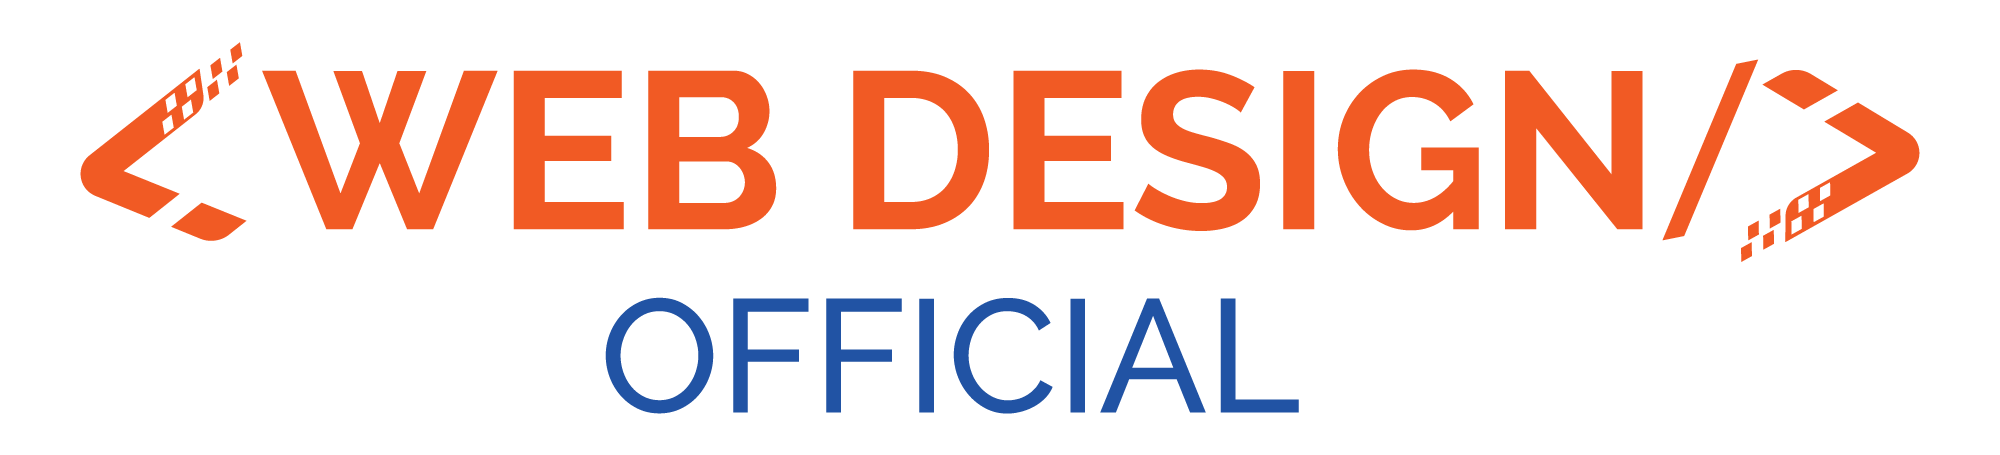 Web Design Official LLC